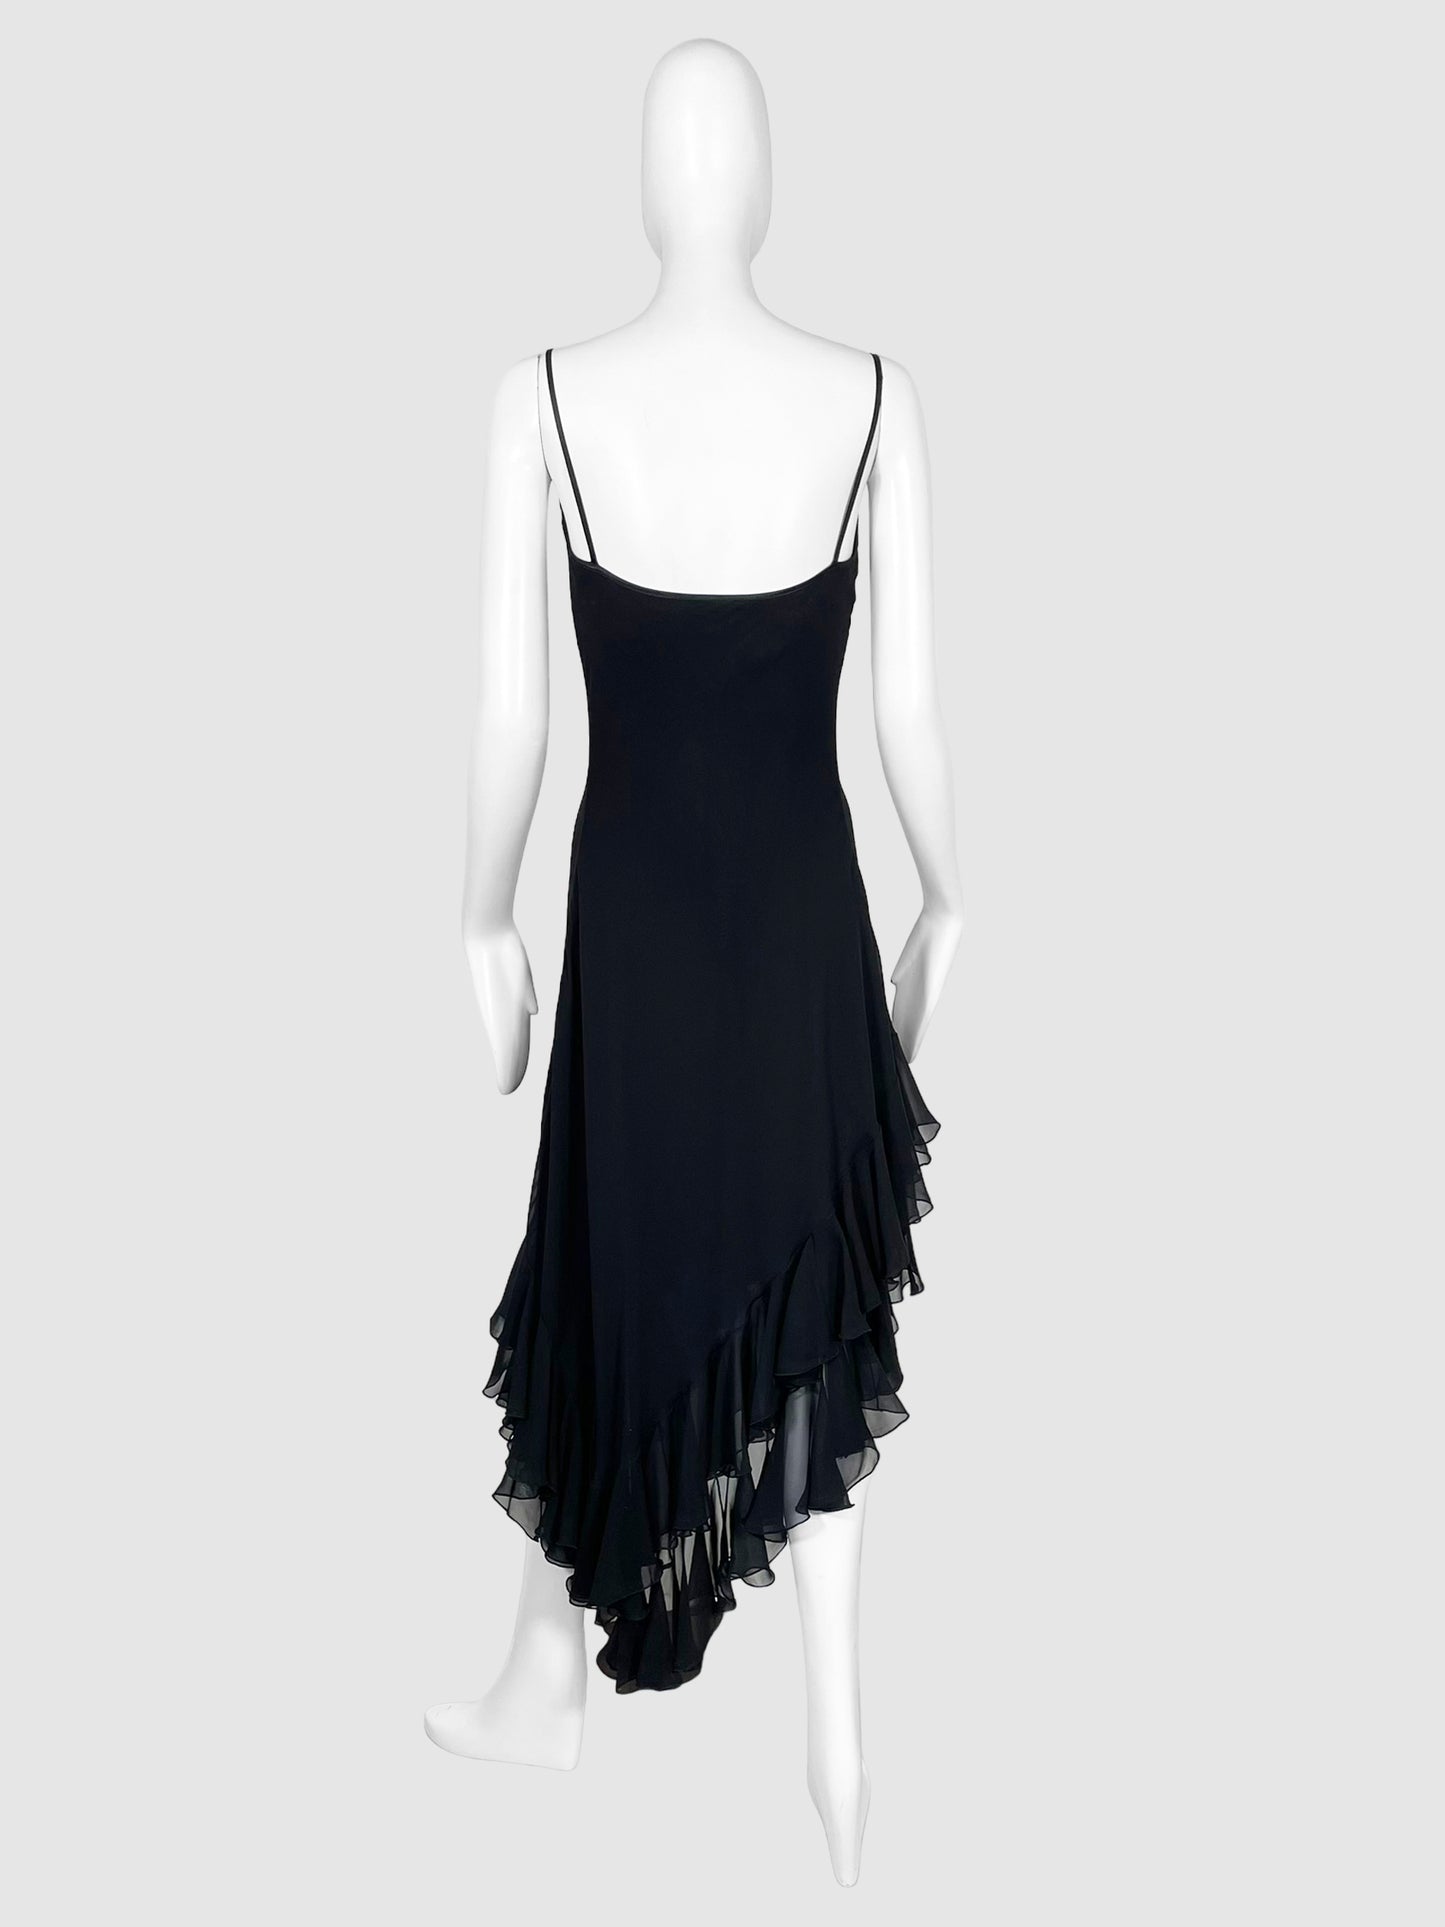 Wayne Clark Cowl Neck Asymmetrical Dress - Size 8